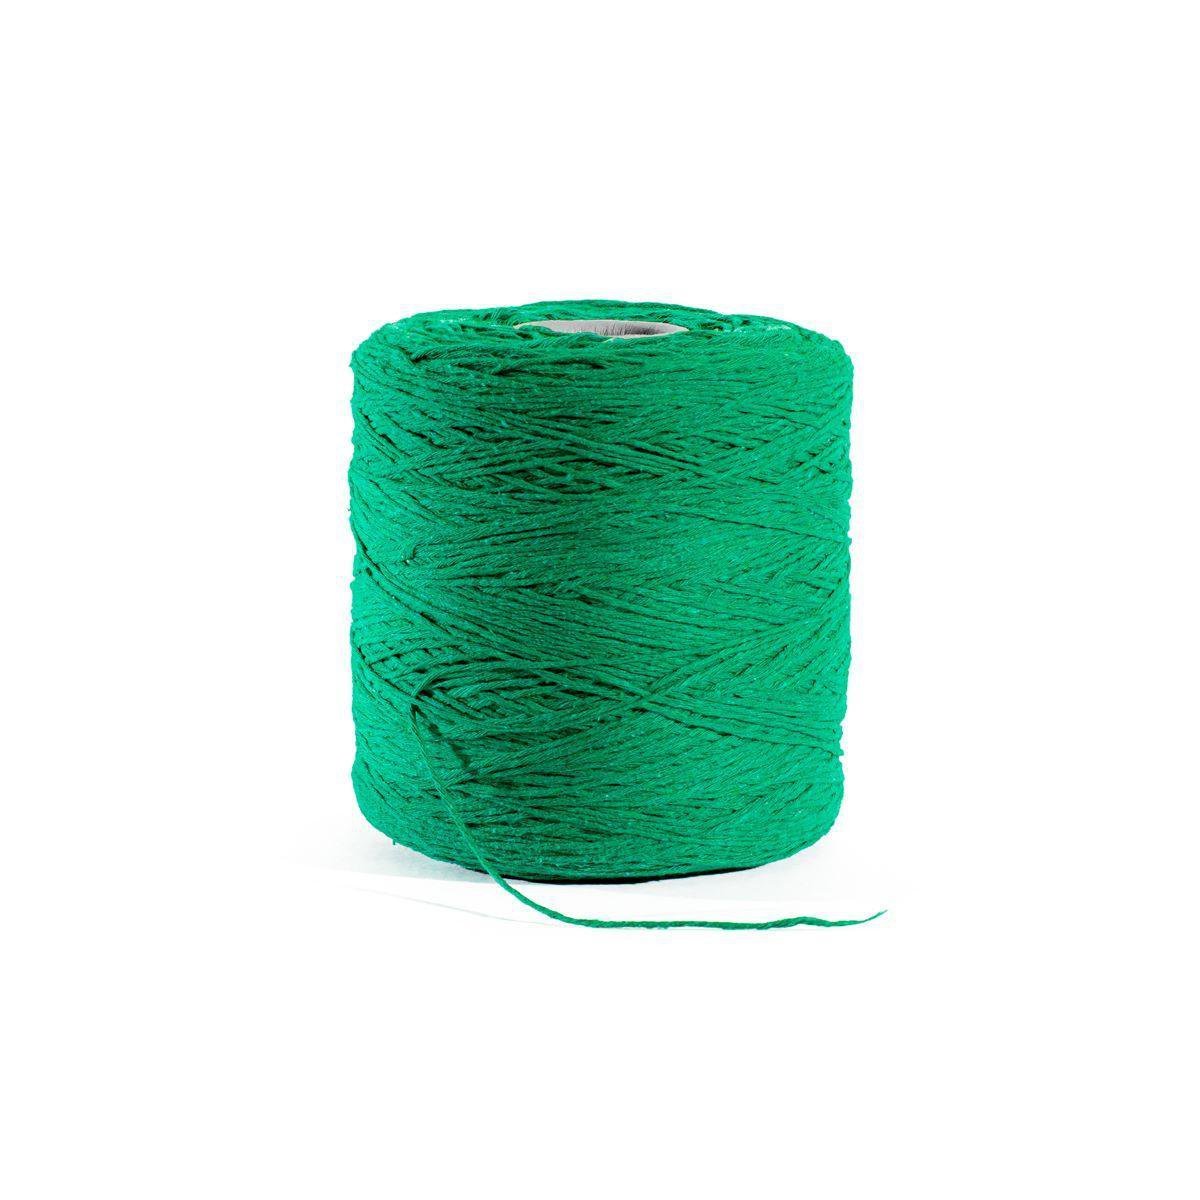 Barbante Ou Linha Para Crochê Colorido Nº 8 - Verde Bandeira - 1